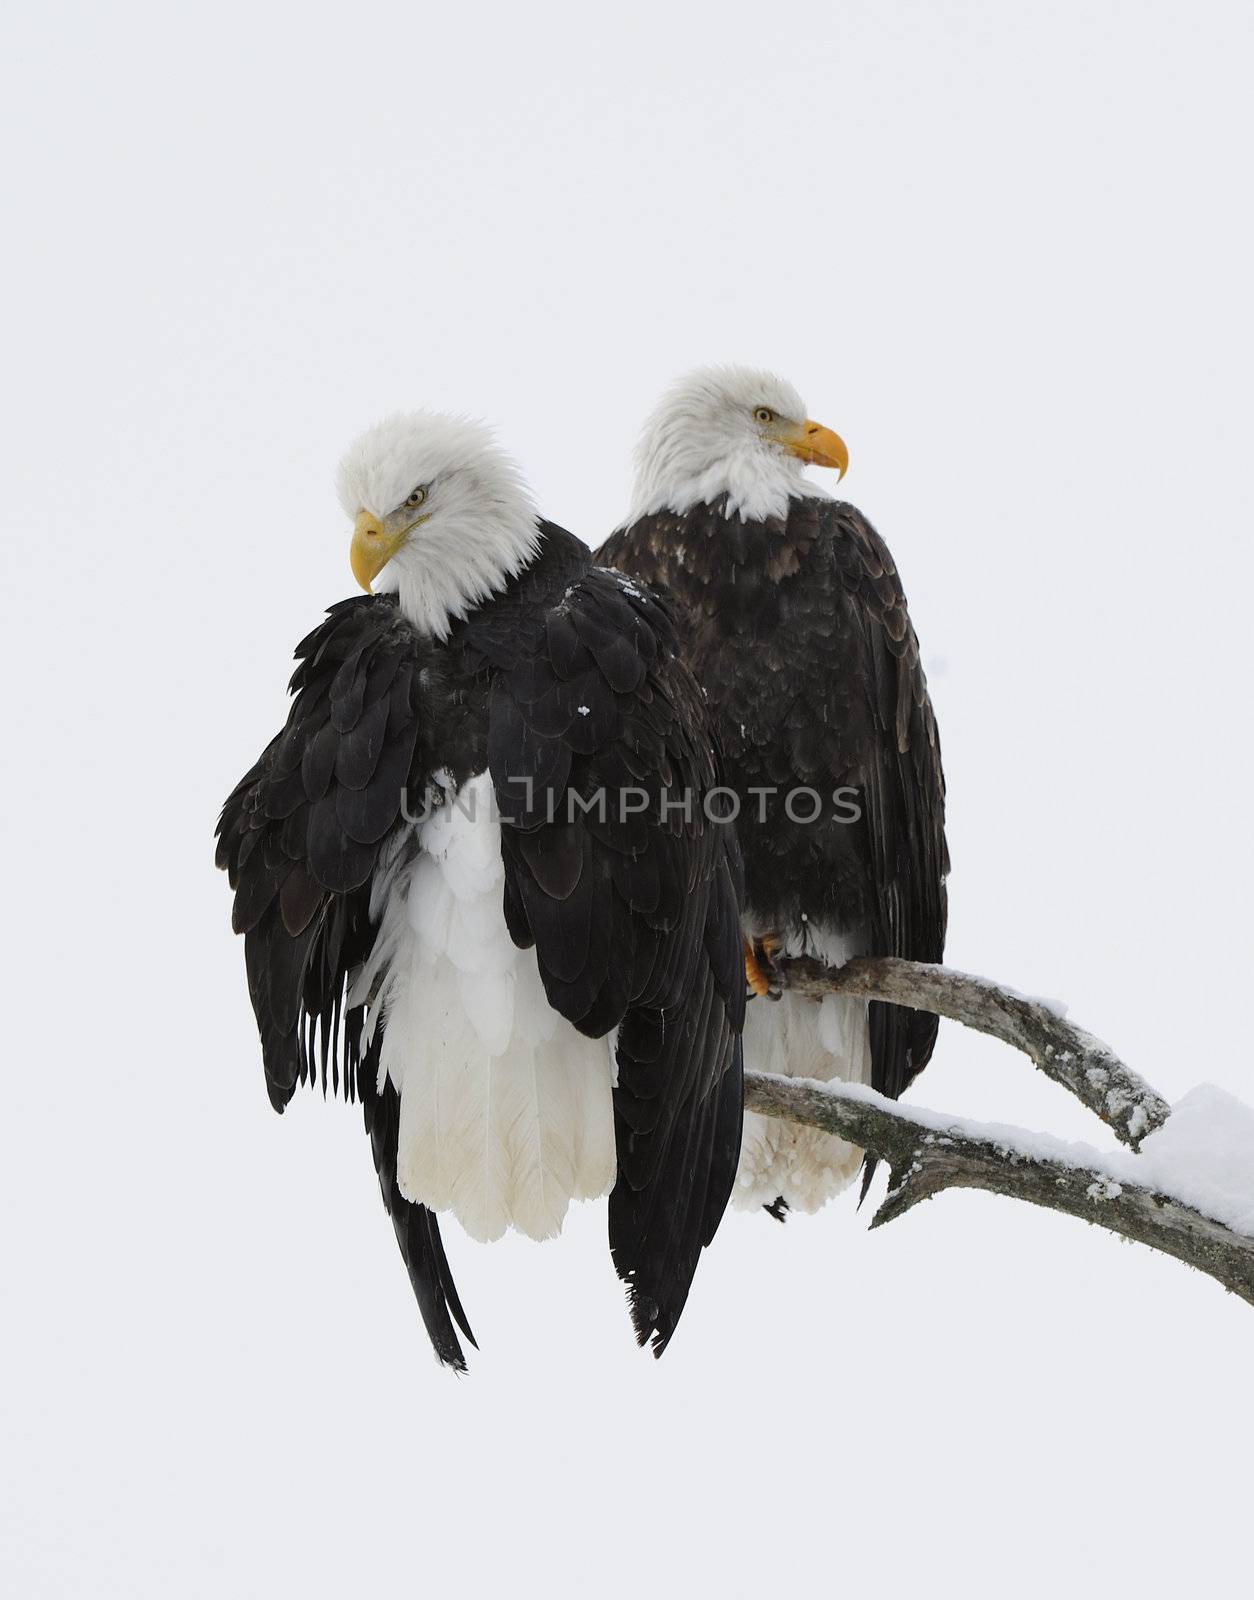 Two eagles ( Haliaeetus leucocephalus )  sit on the dried up tree